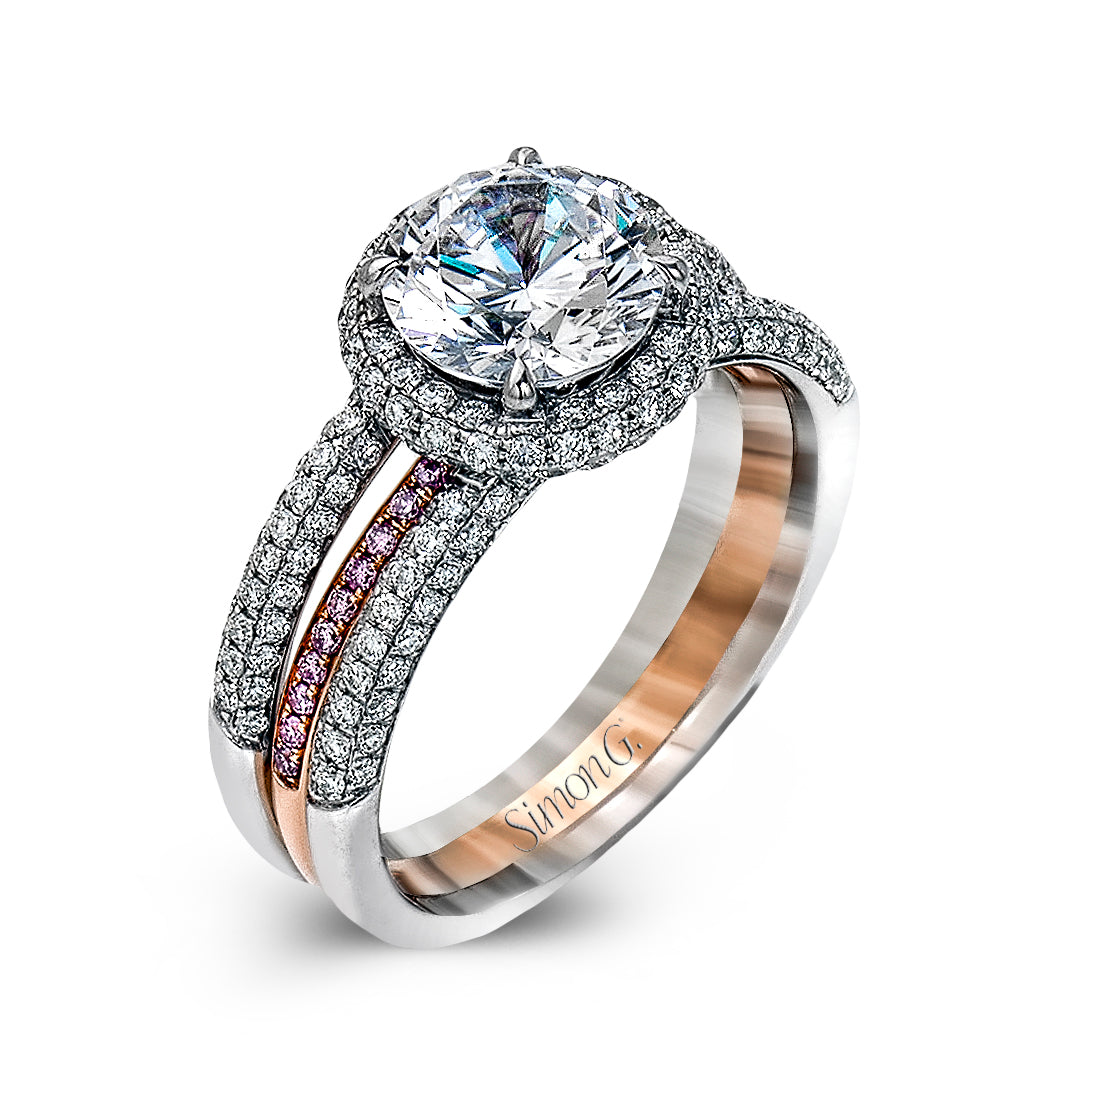 Simon G 18K White and Rose Gold Diamond Engagement Ring